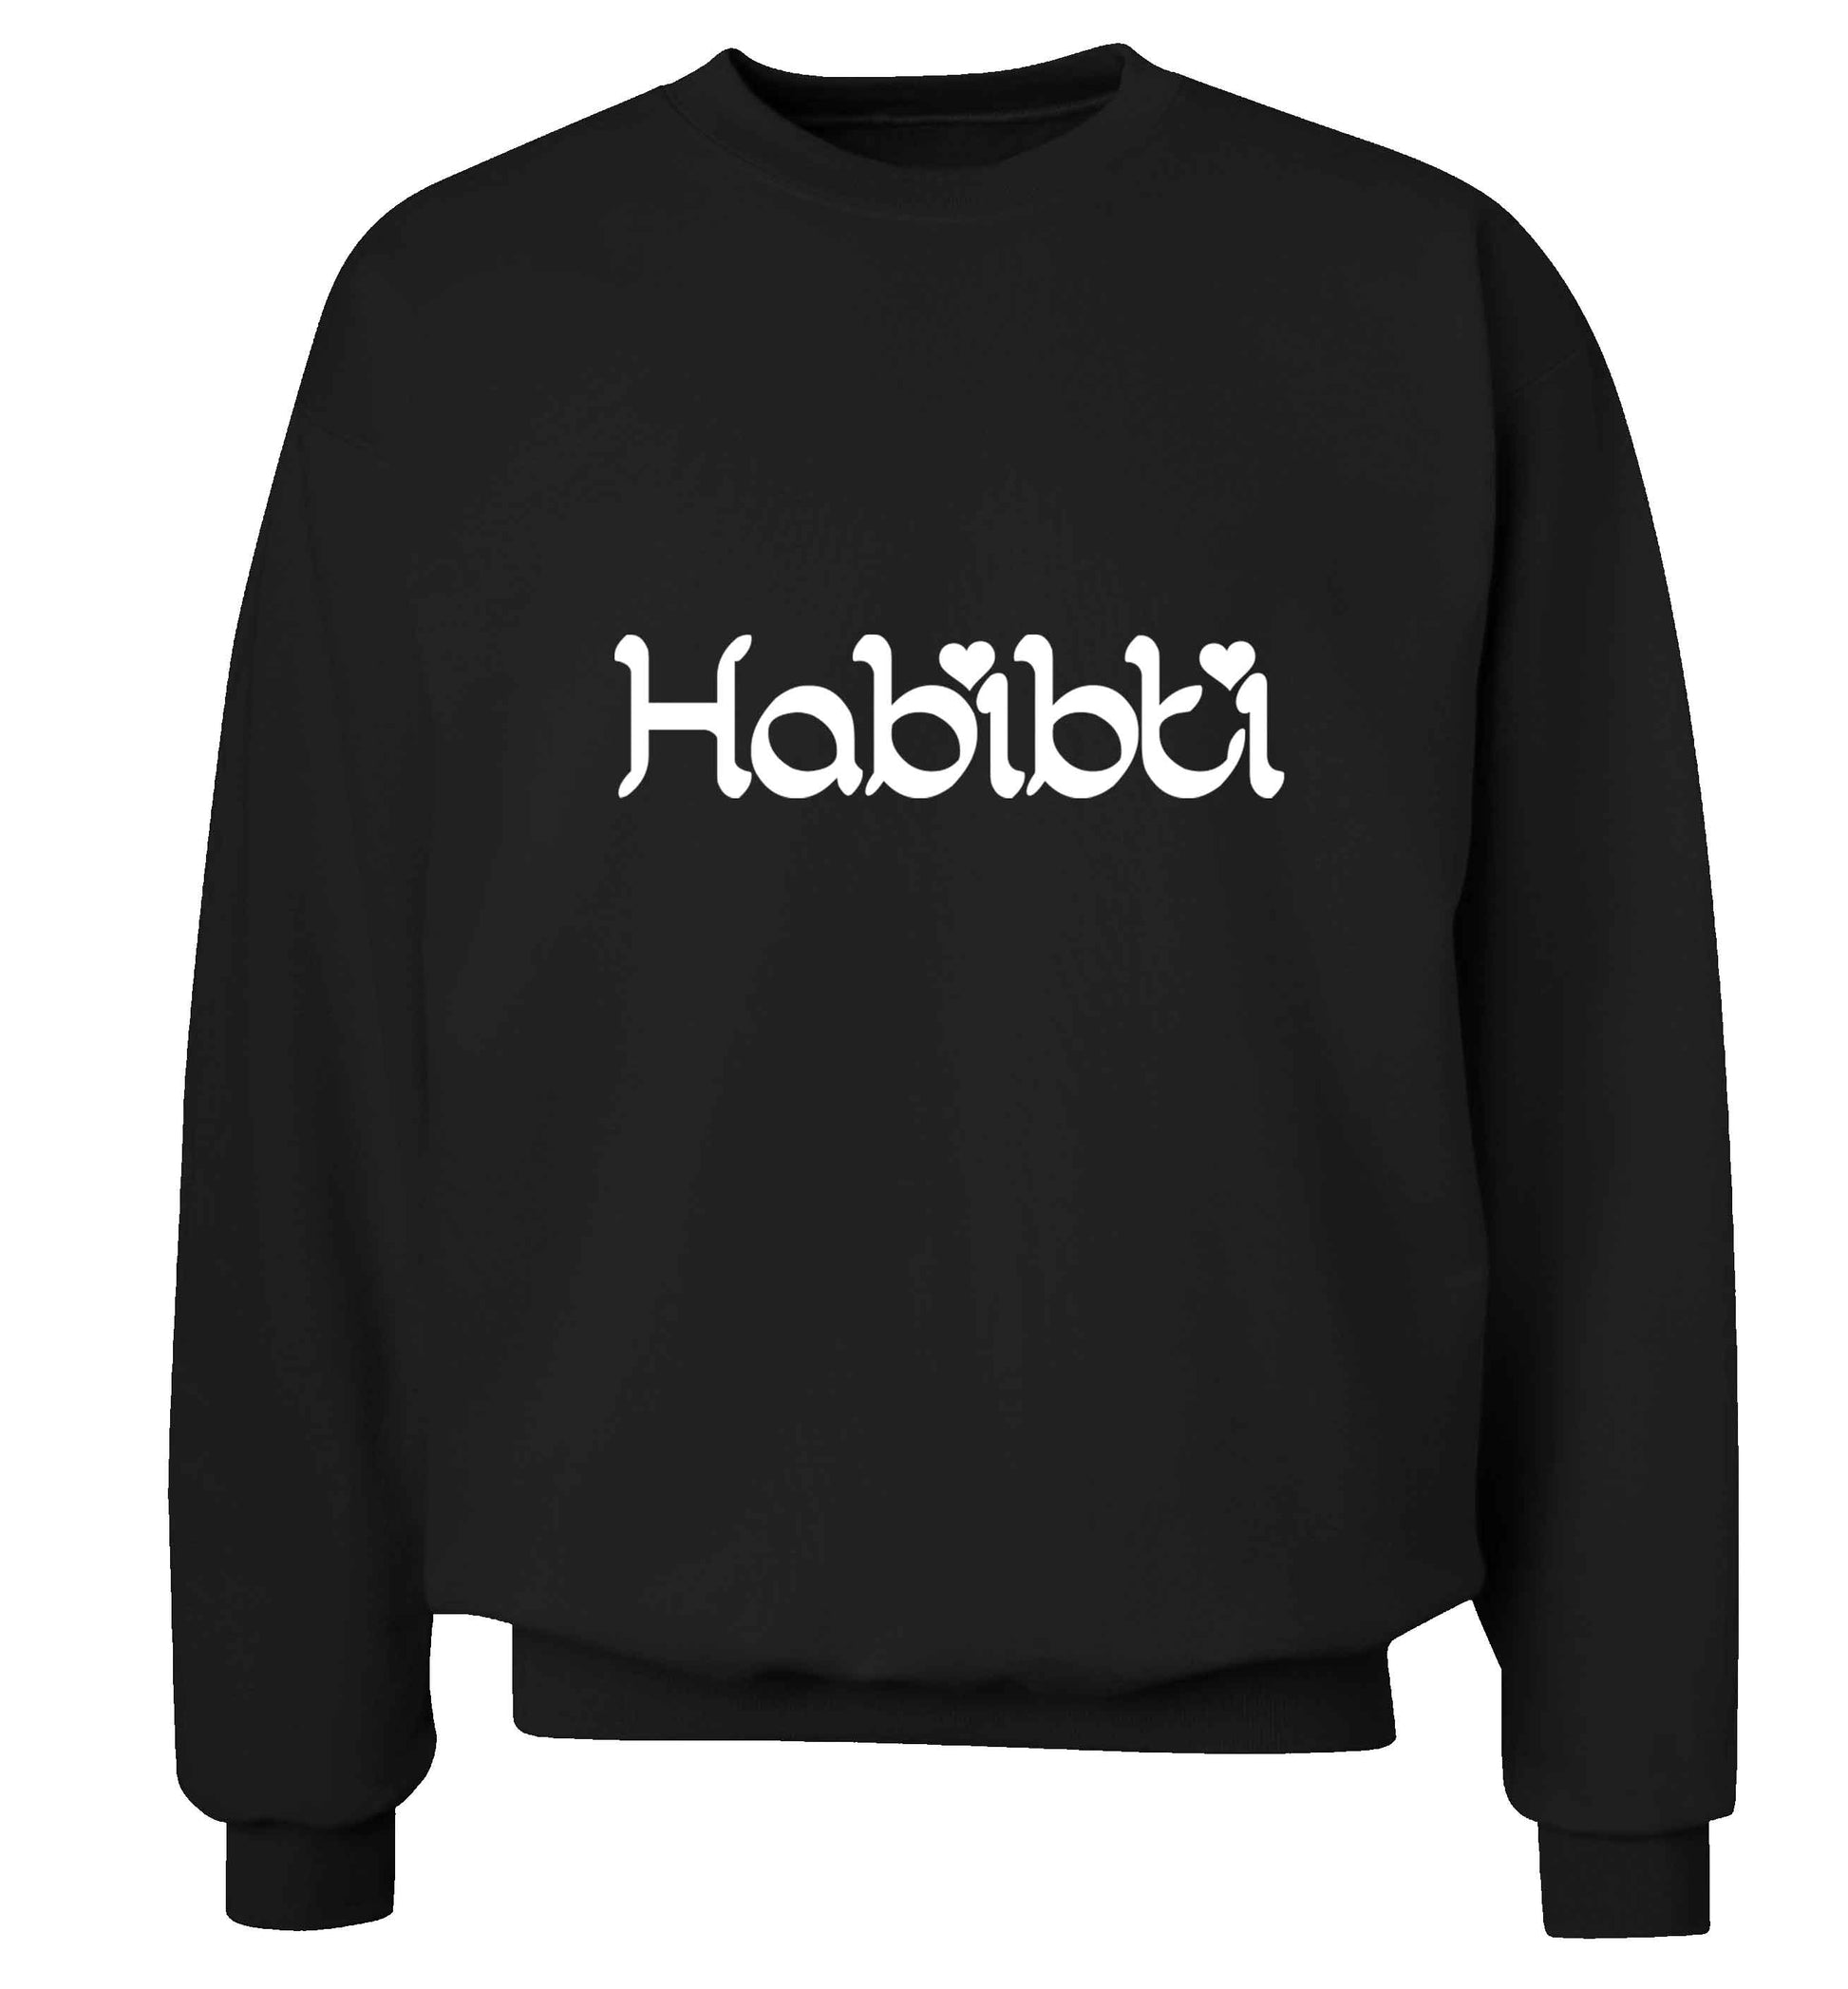 Habibiti adult's unisex black sweater 2XL